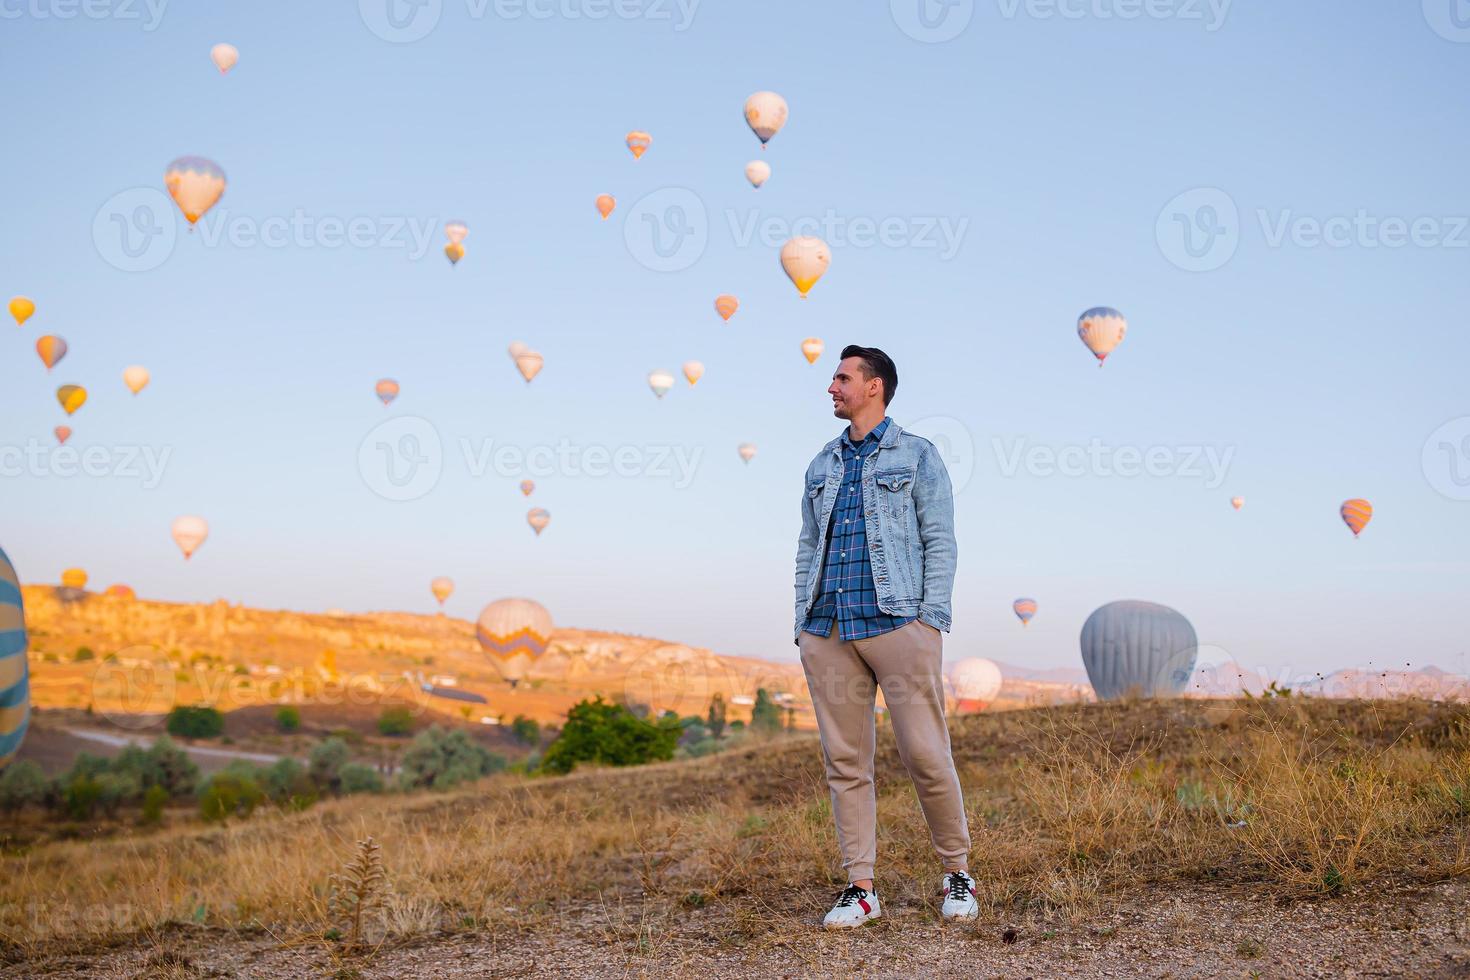 contento uomo durante Alba Guardando caldo aria palloncini nel cappadocia, tacchino foto